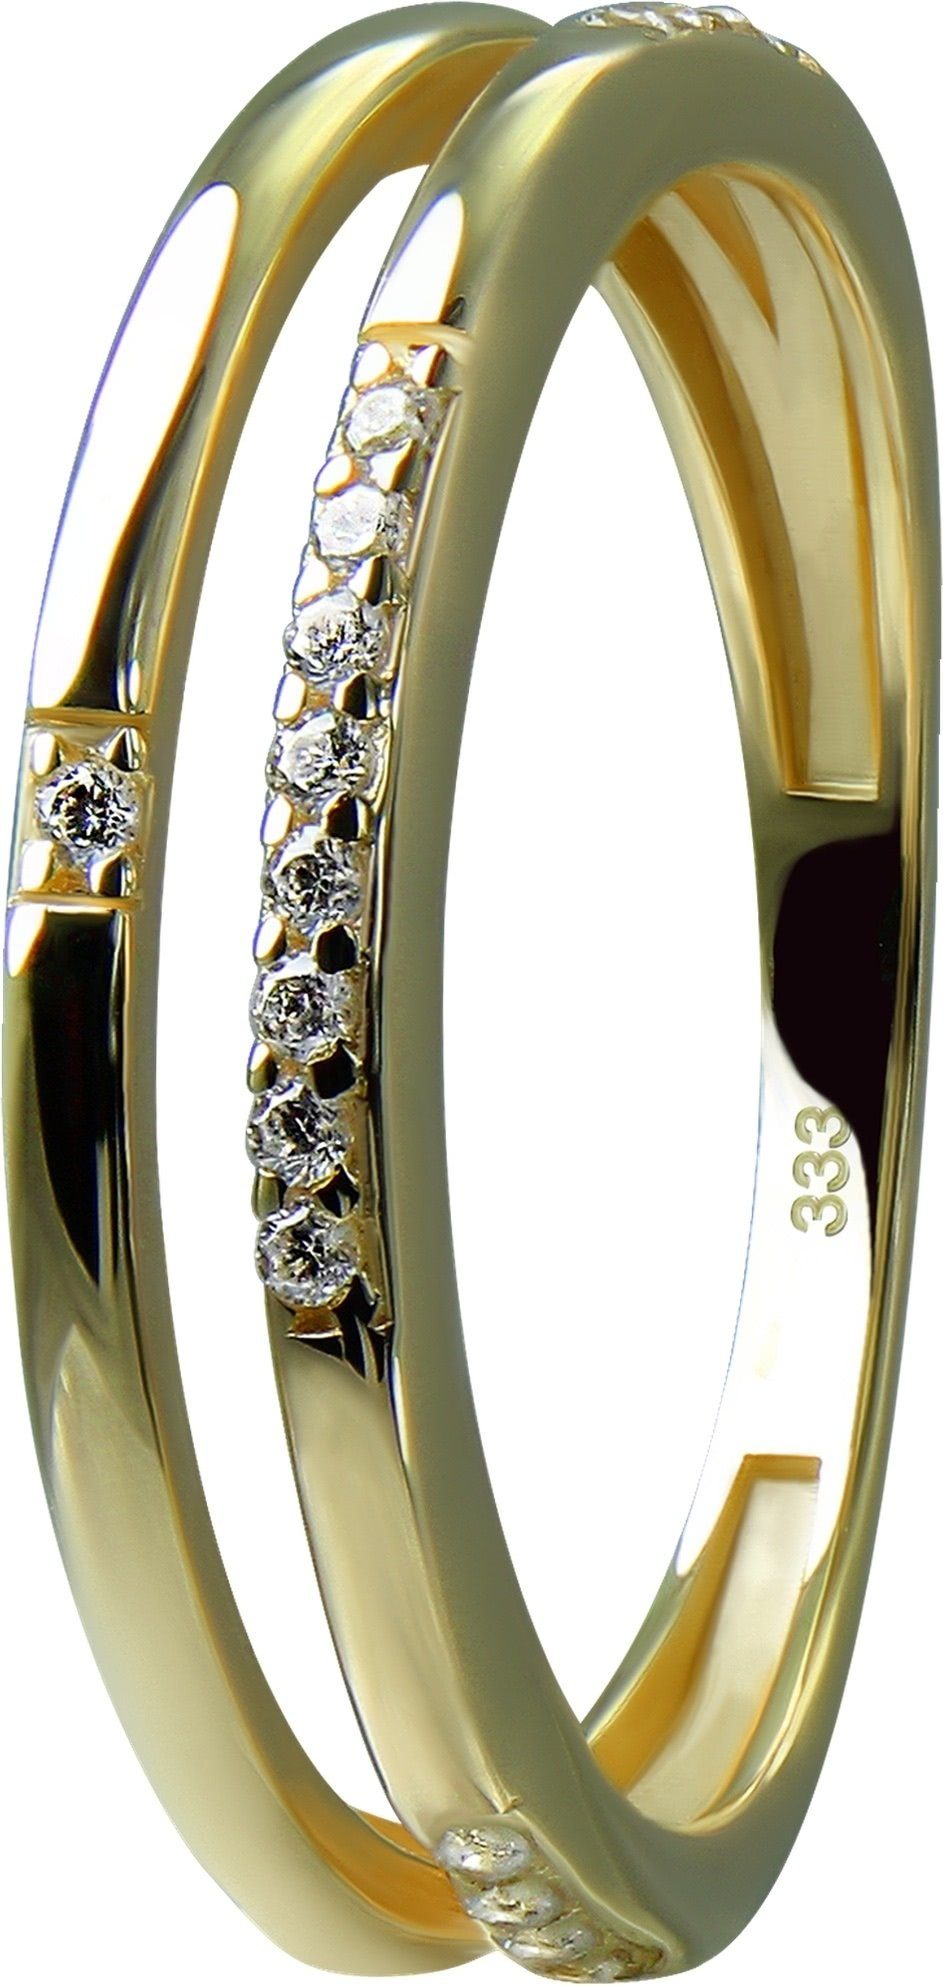 GoldDream Goldring GoldDream Gold Ring Double Gr.60 (Fingerring), Damen Ring Double 333 Gelbgold - 8 Karat, Farbe: gold, weiß